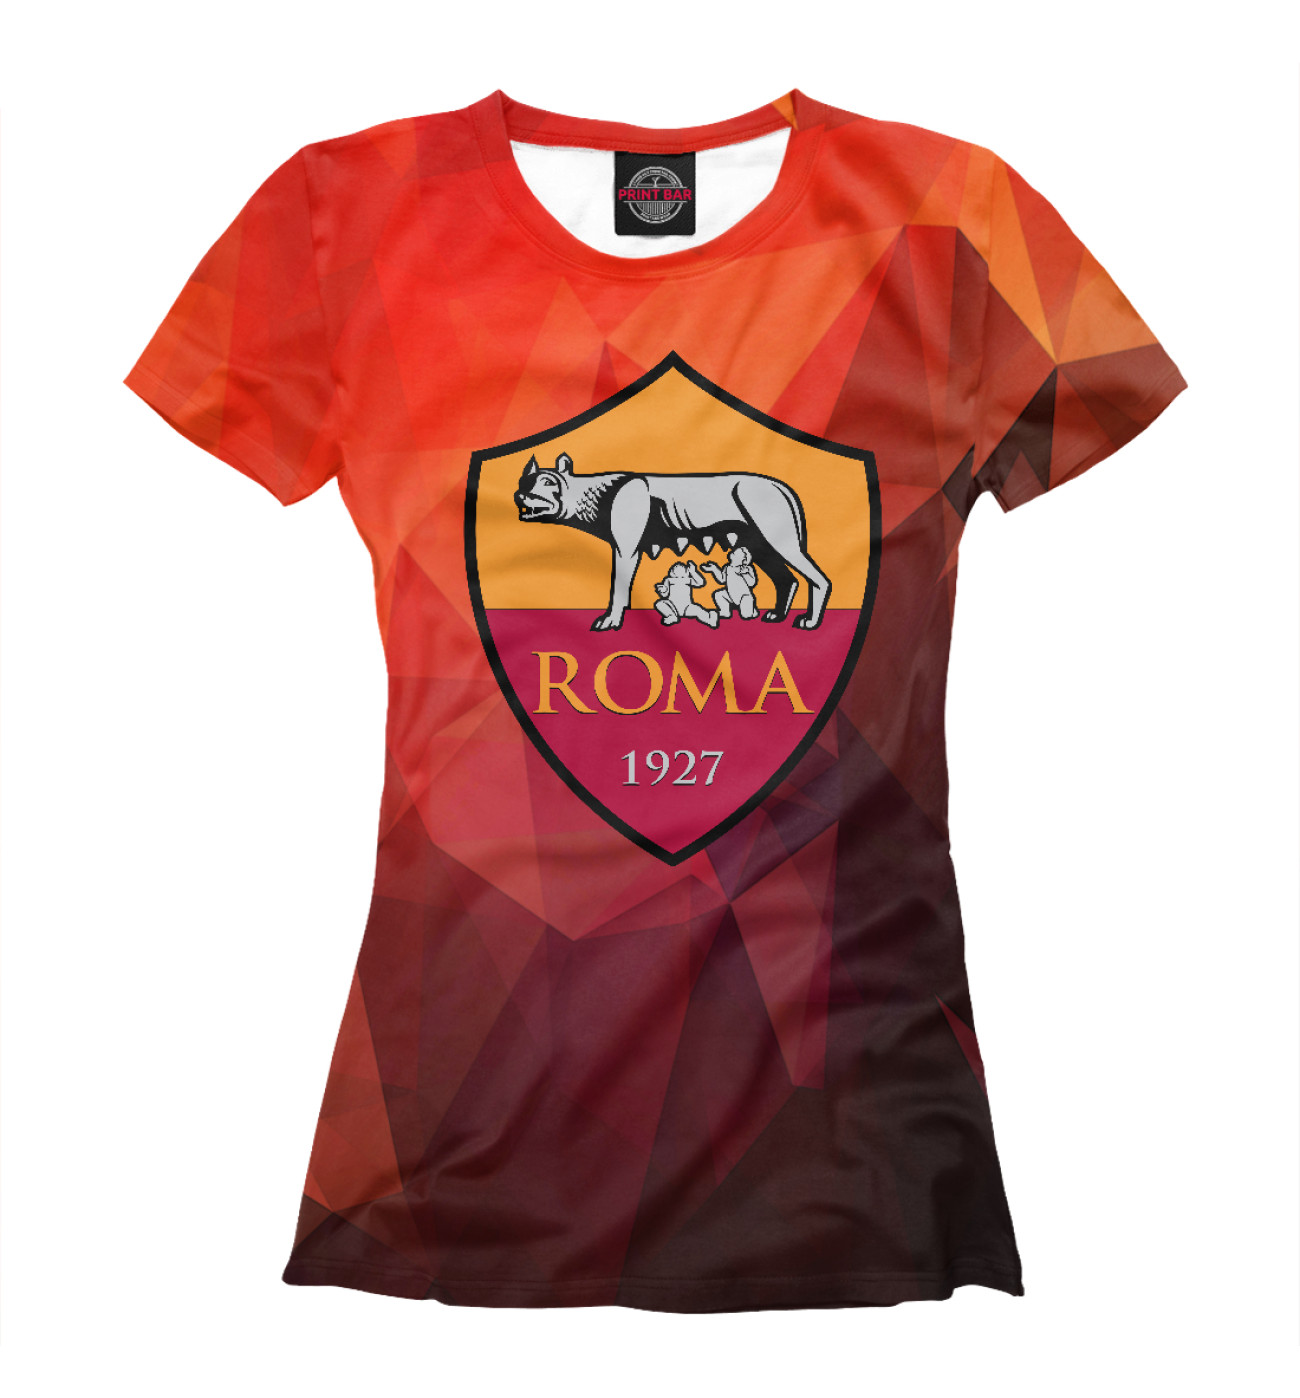 Женская Футболка Roma / Рома, артикул: RMA-785580-fut-1